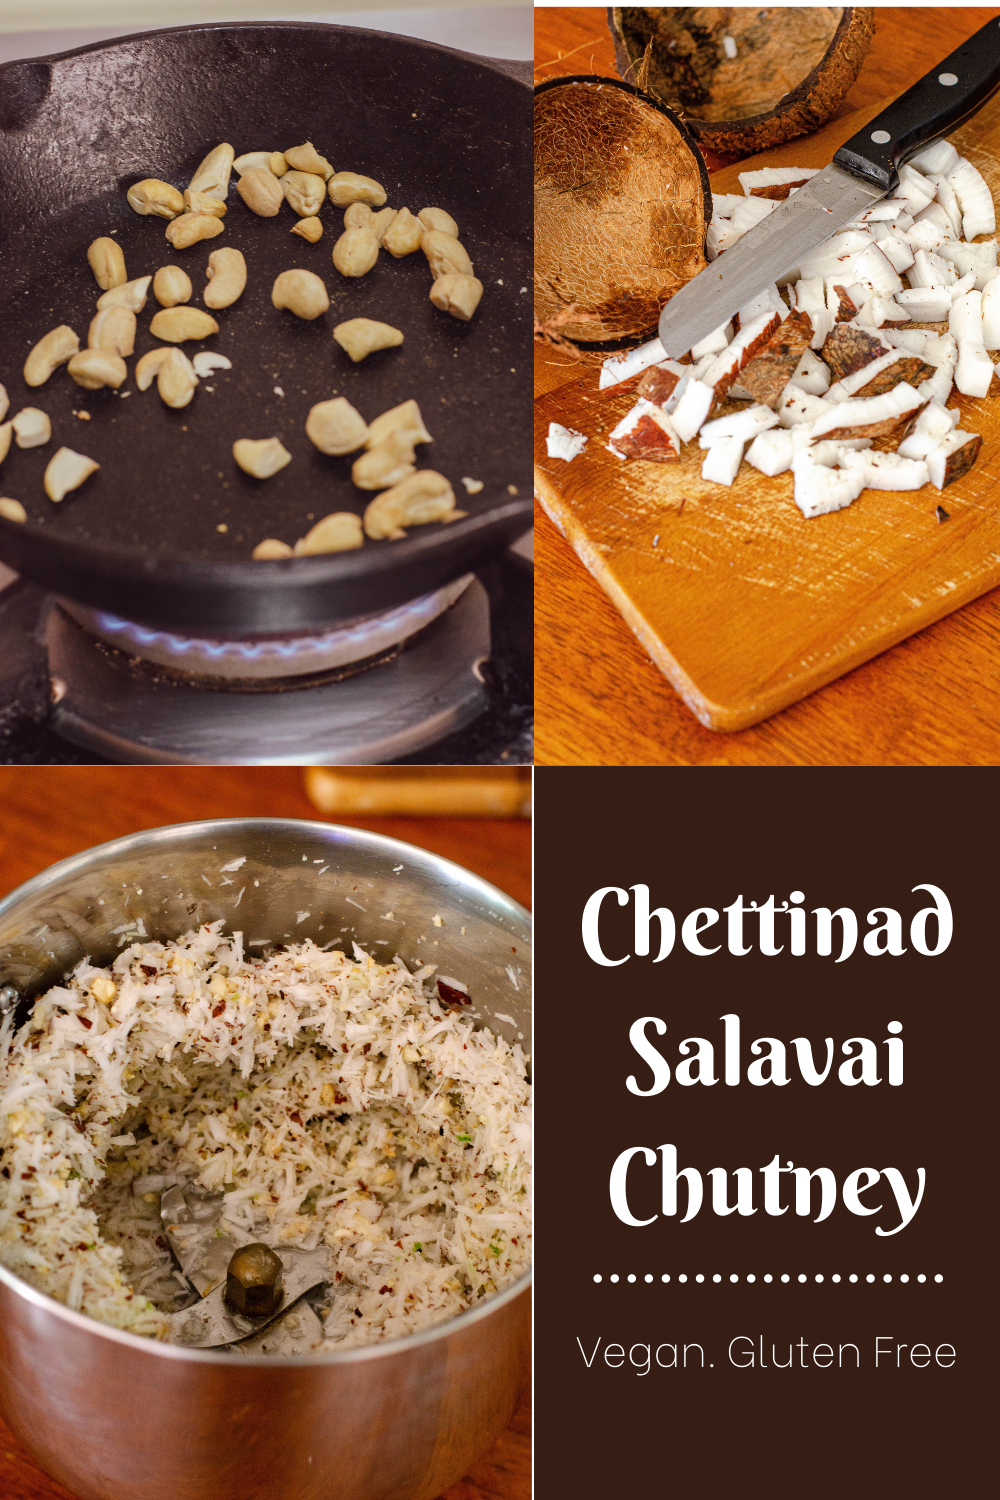 Steps involved in making Chettinad Salavai Chutney